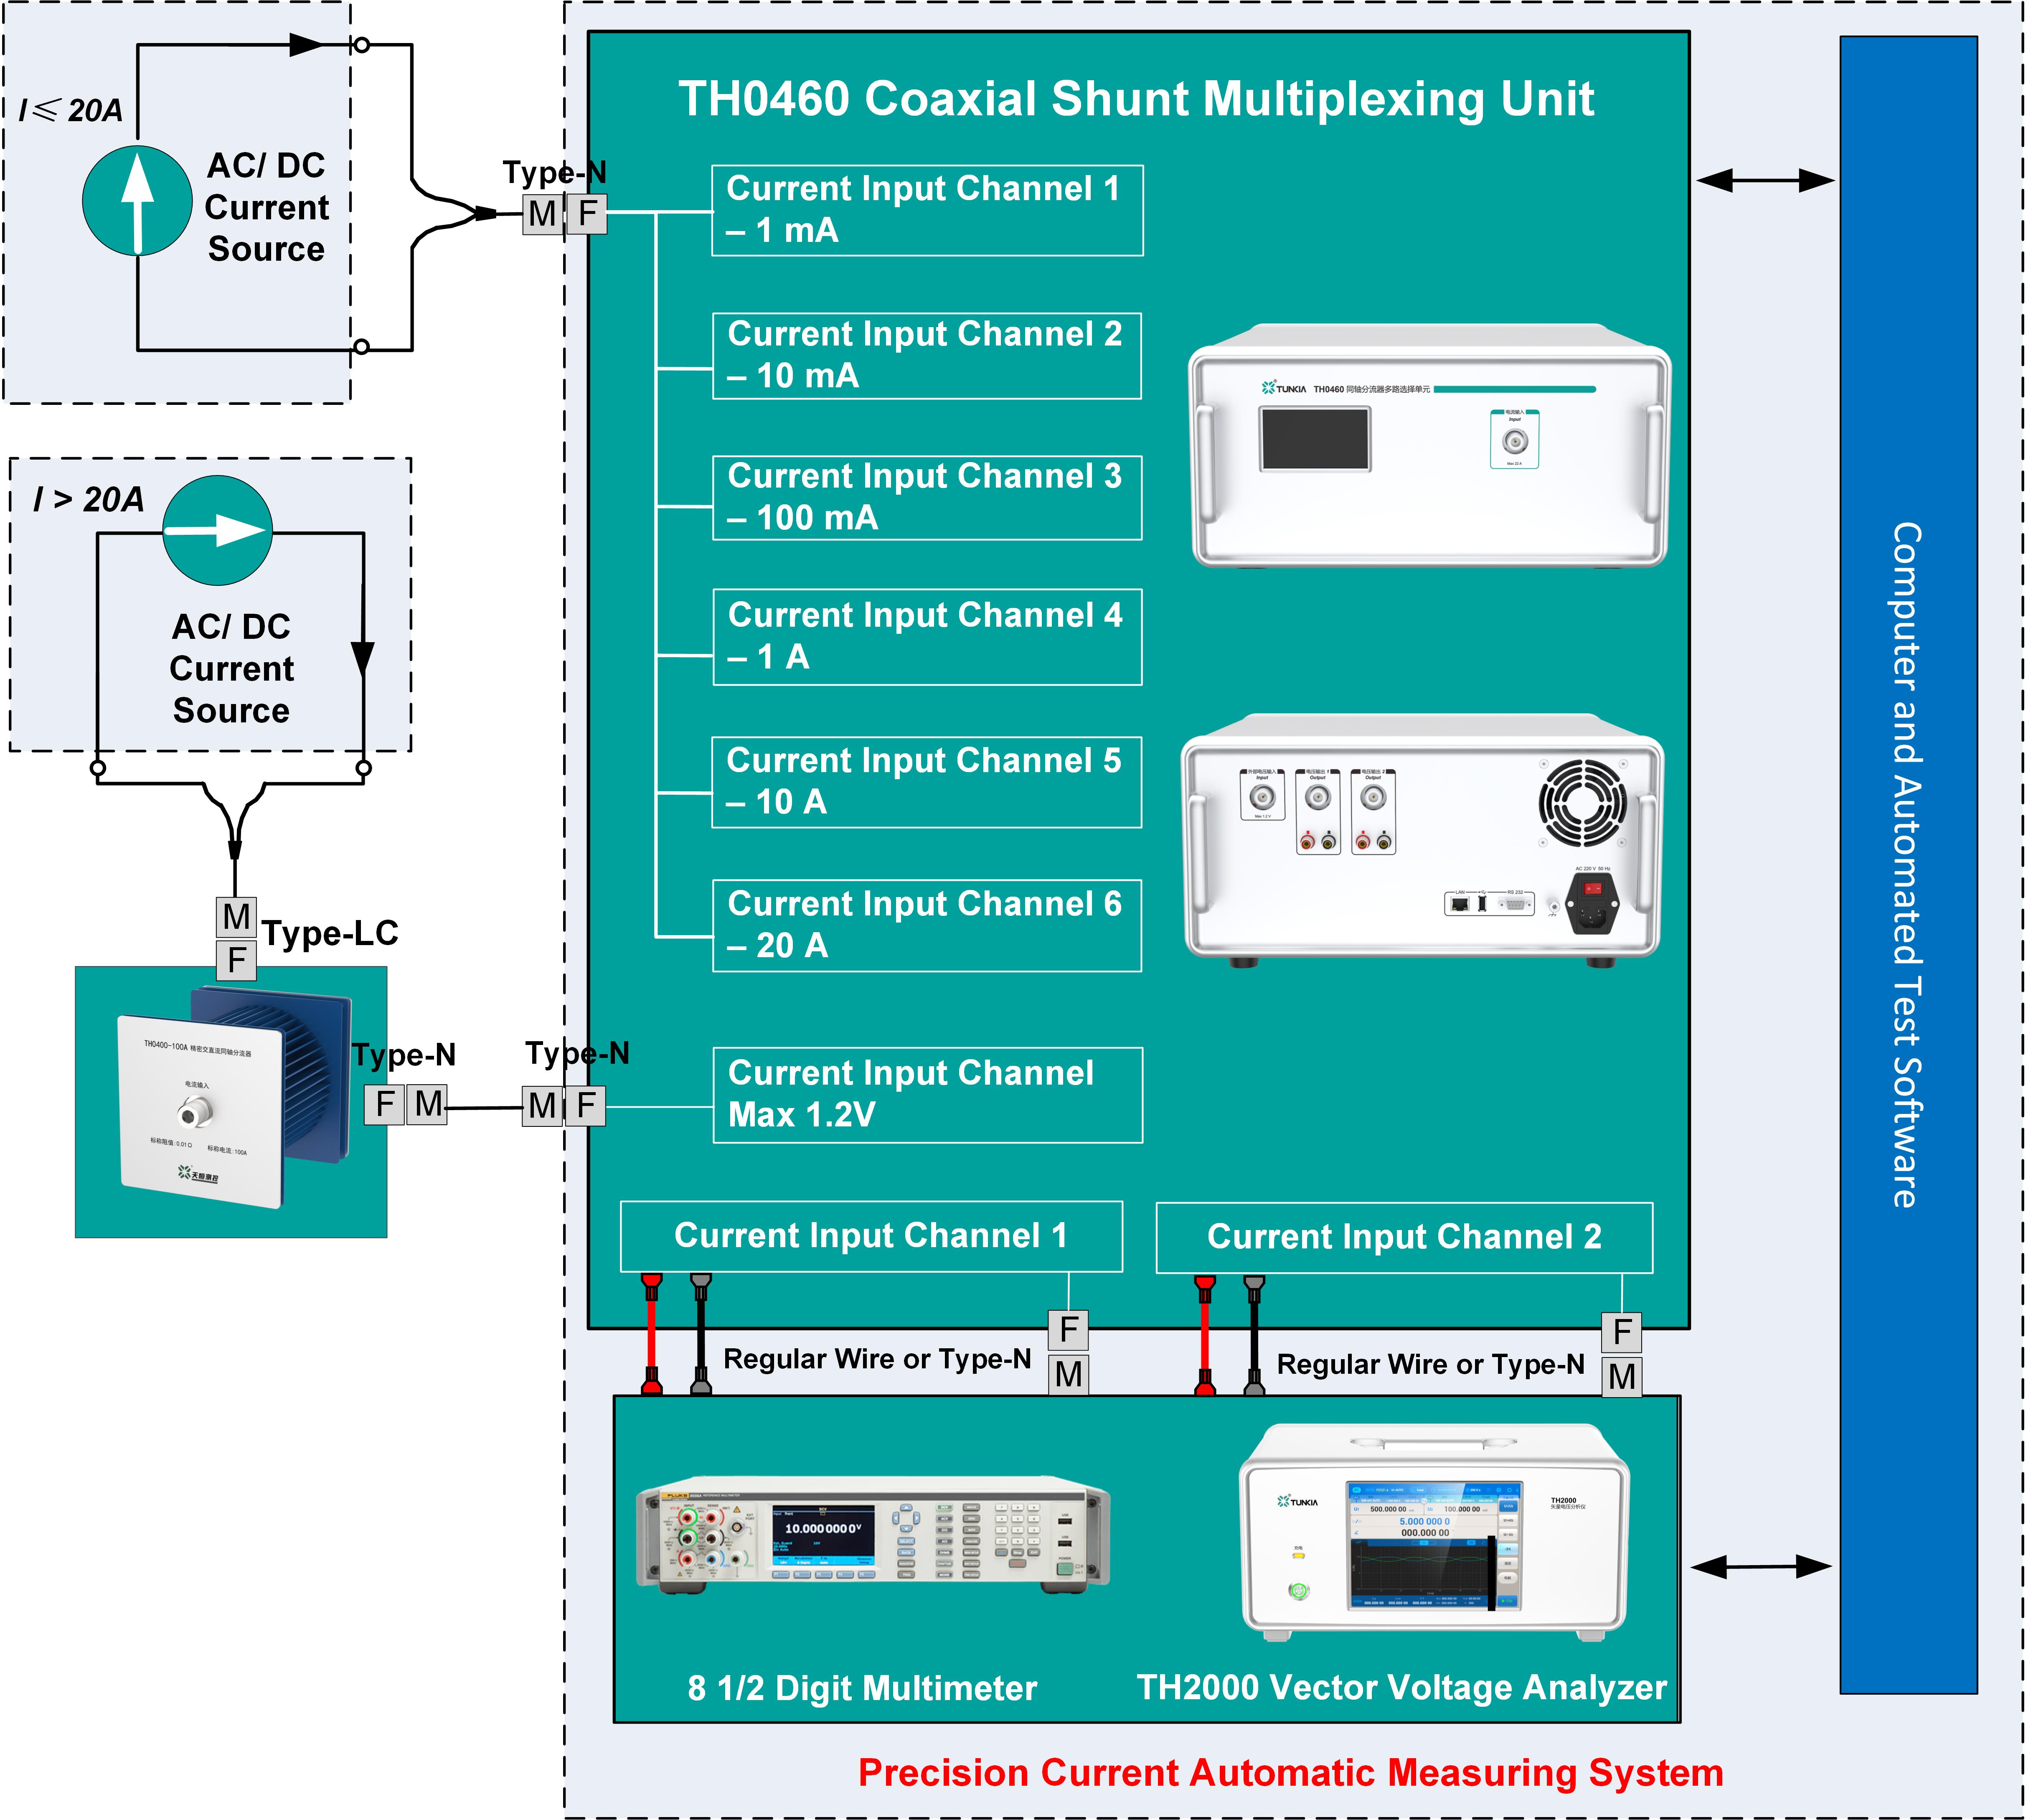 TH0460 Coaxial Shunt Multiplexing Unit Application